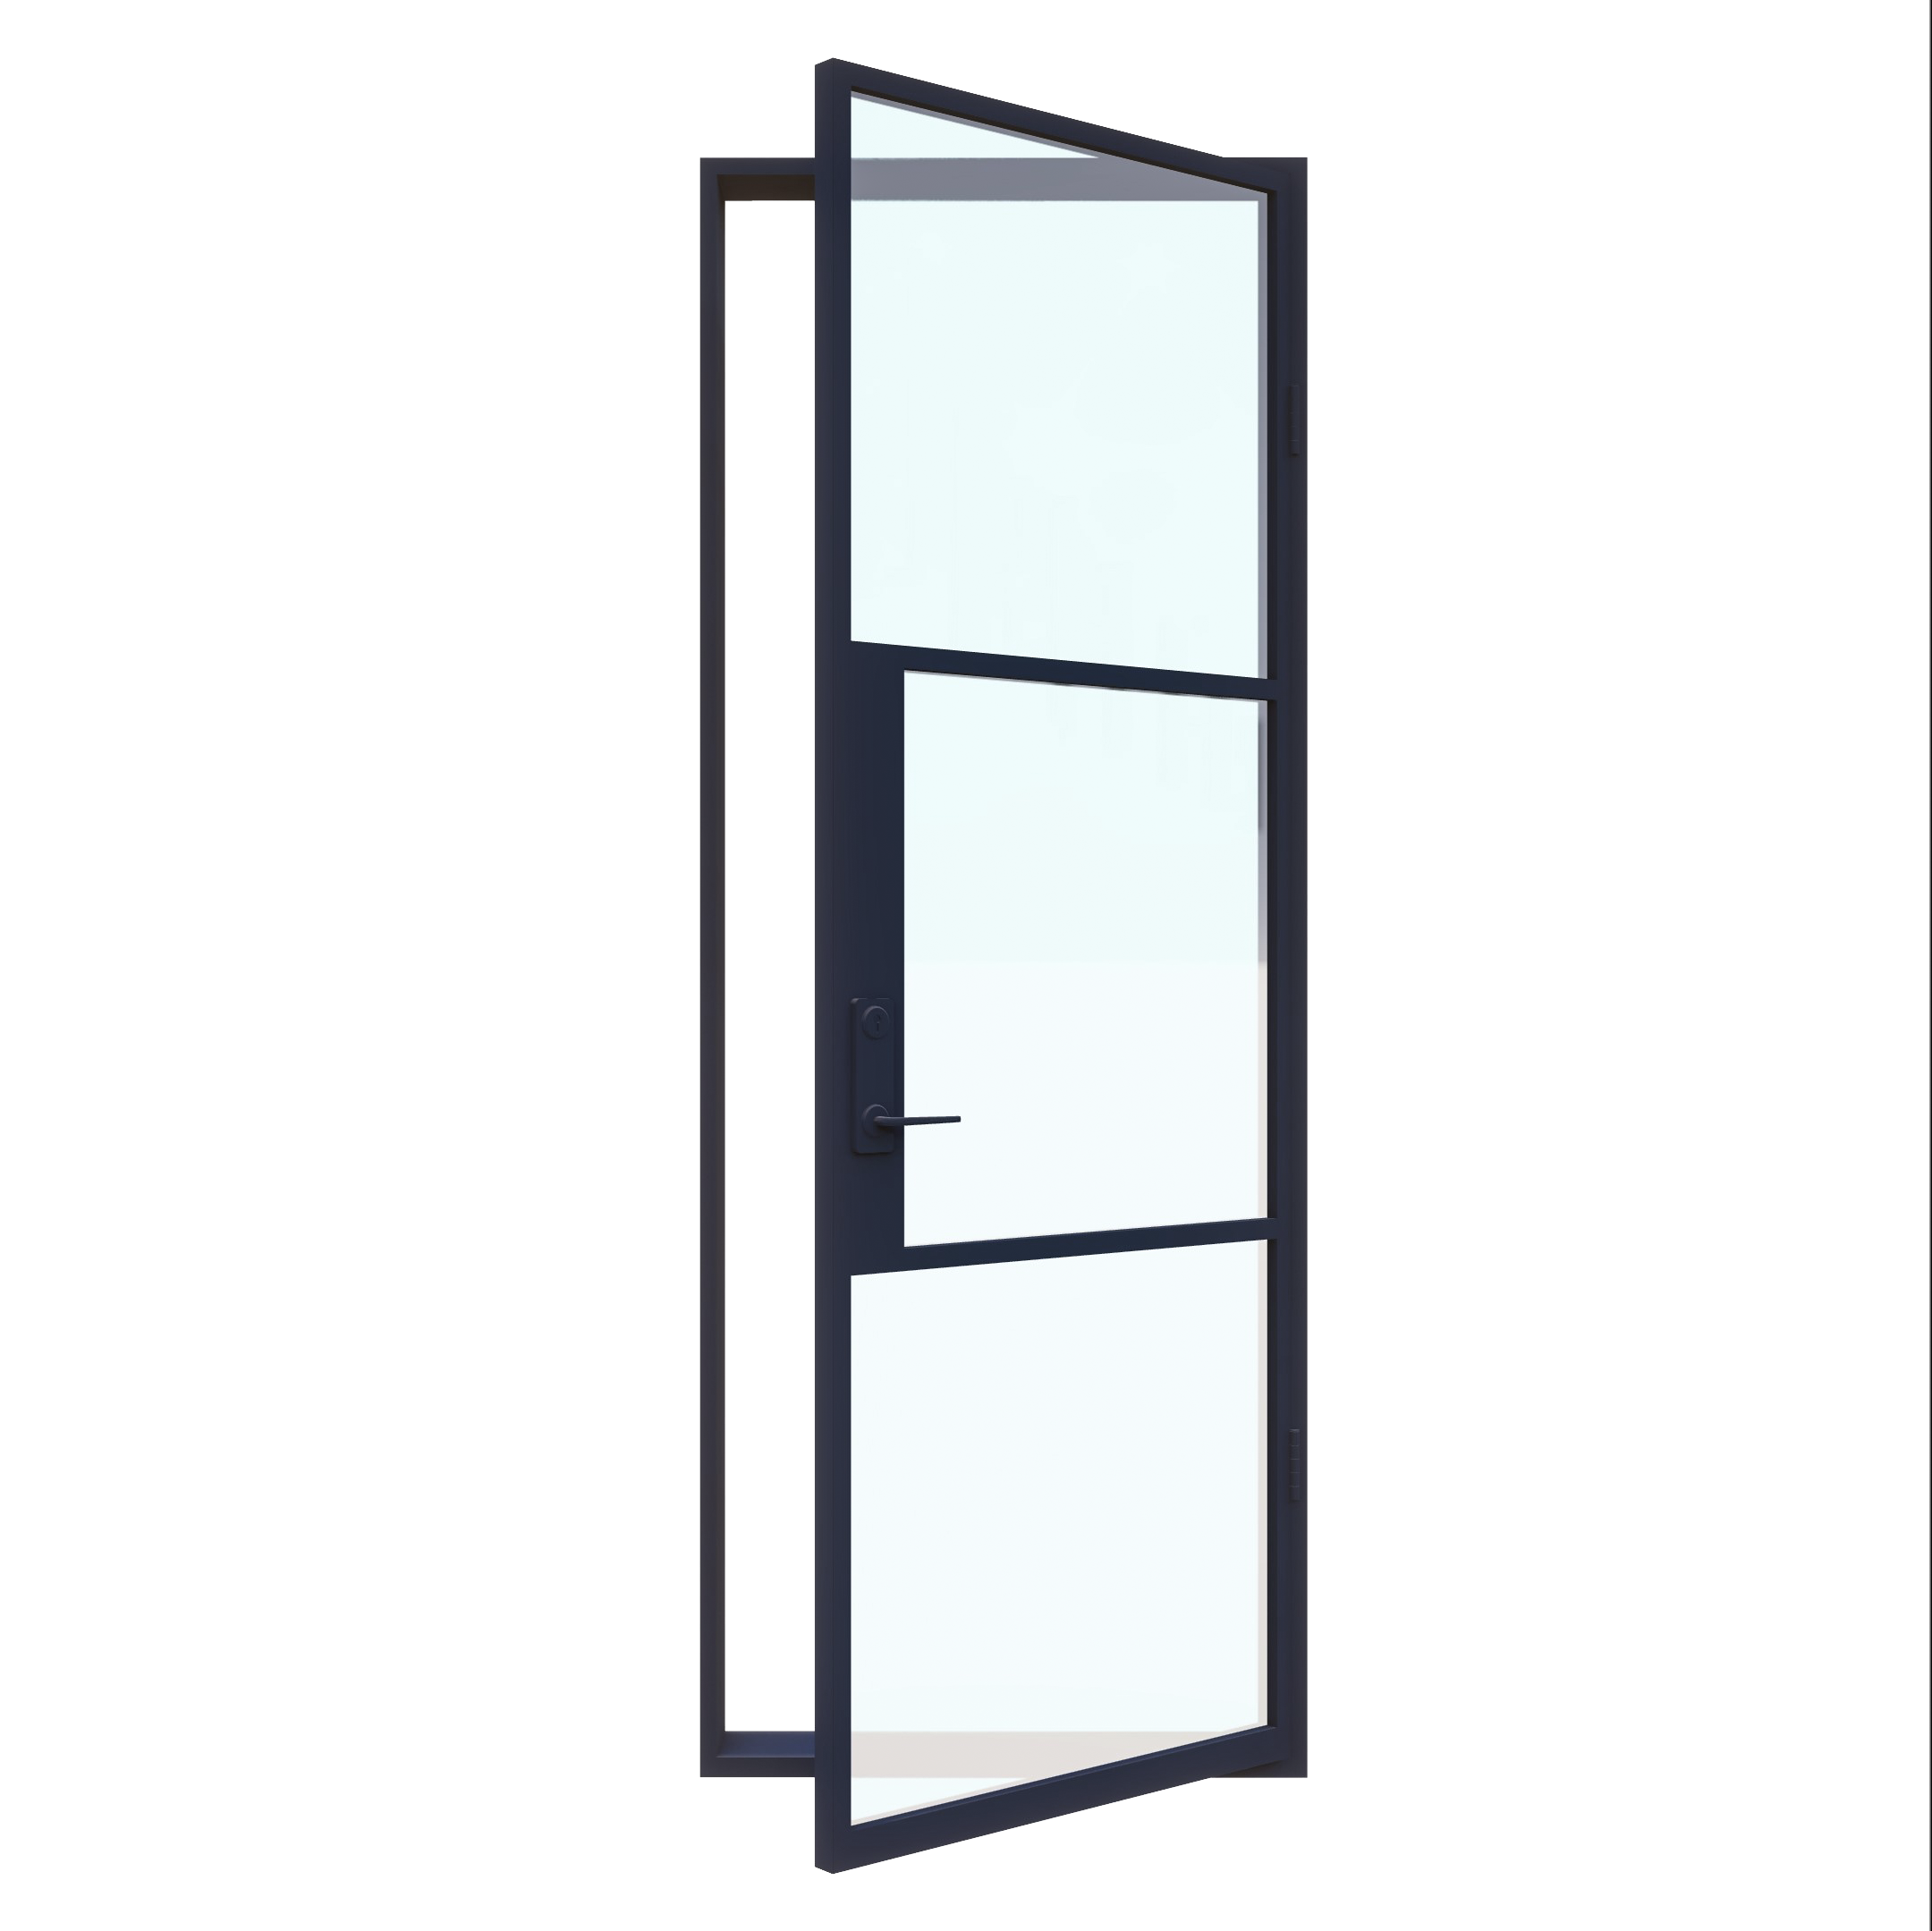 Light 3 Single | Steel French Doors